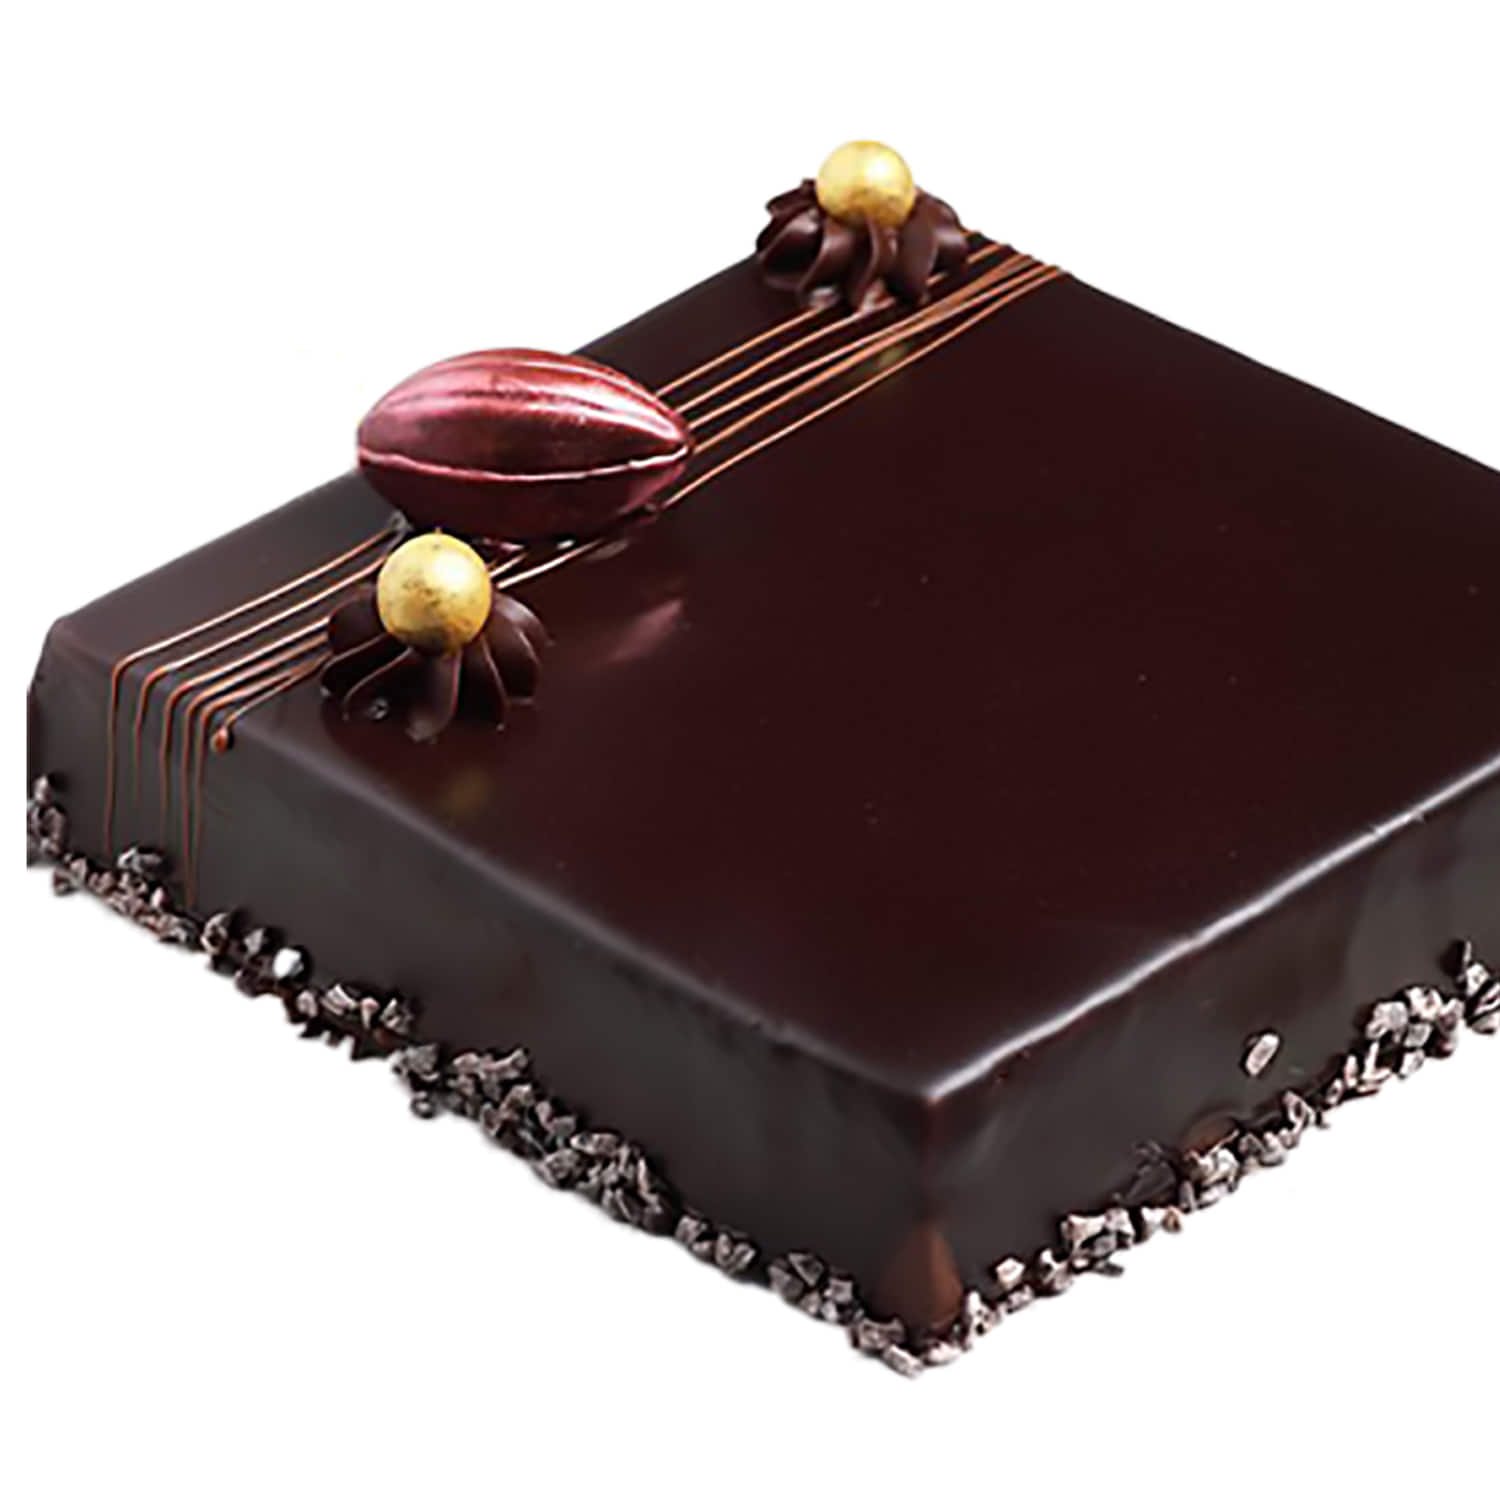 Aggregate more than 60 paradise chocolate cake - awesomeenglish.edu.vn